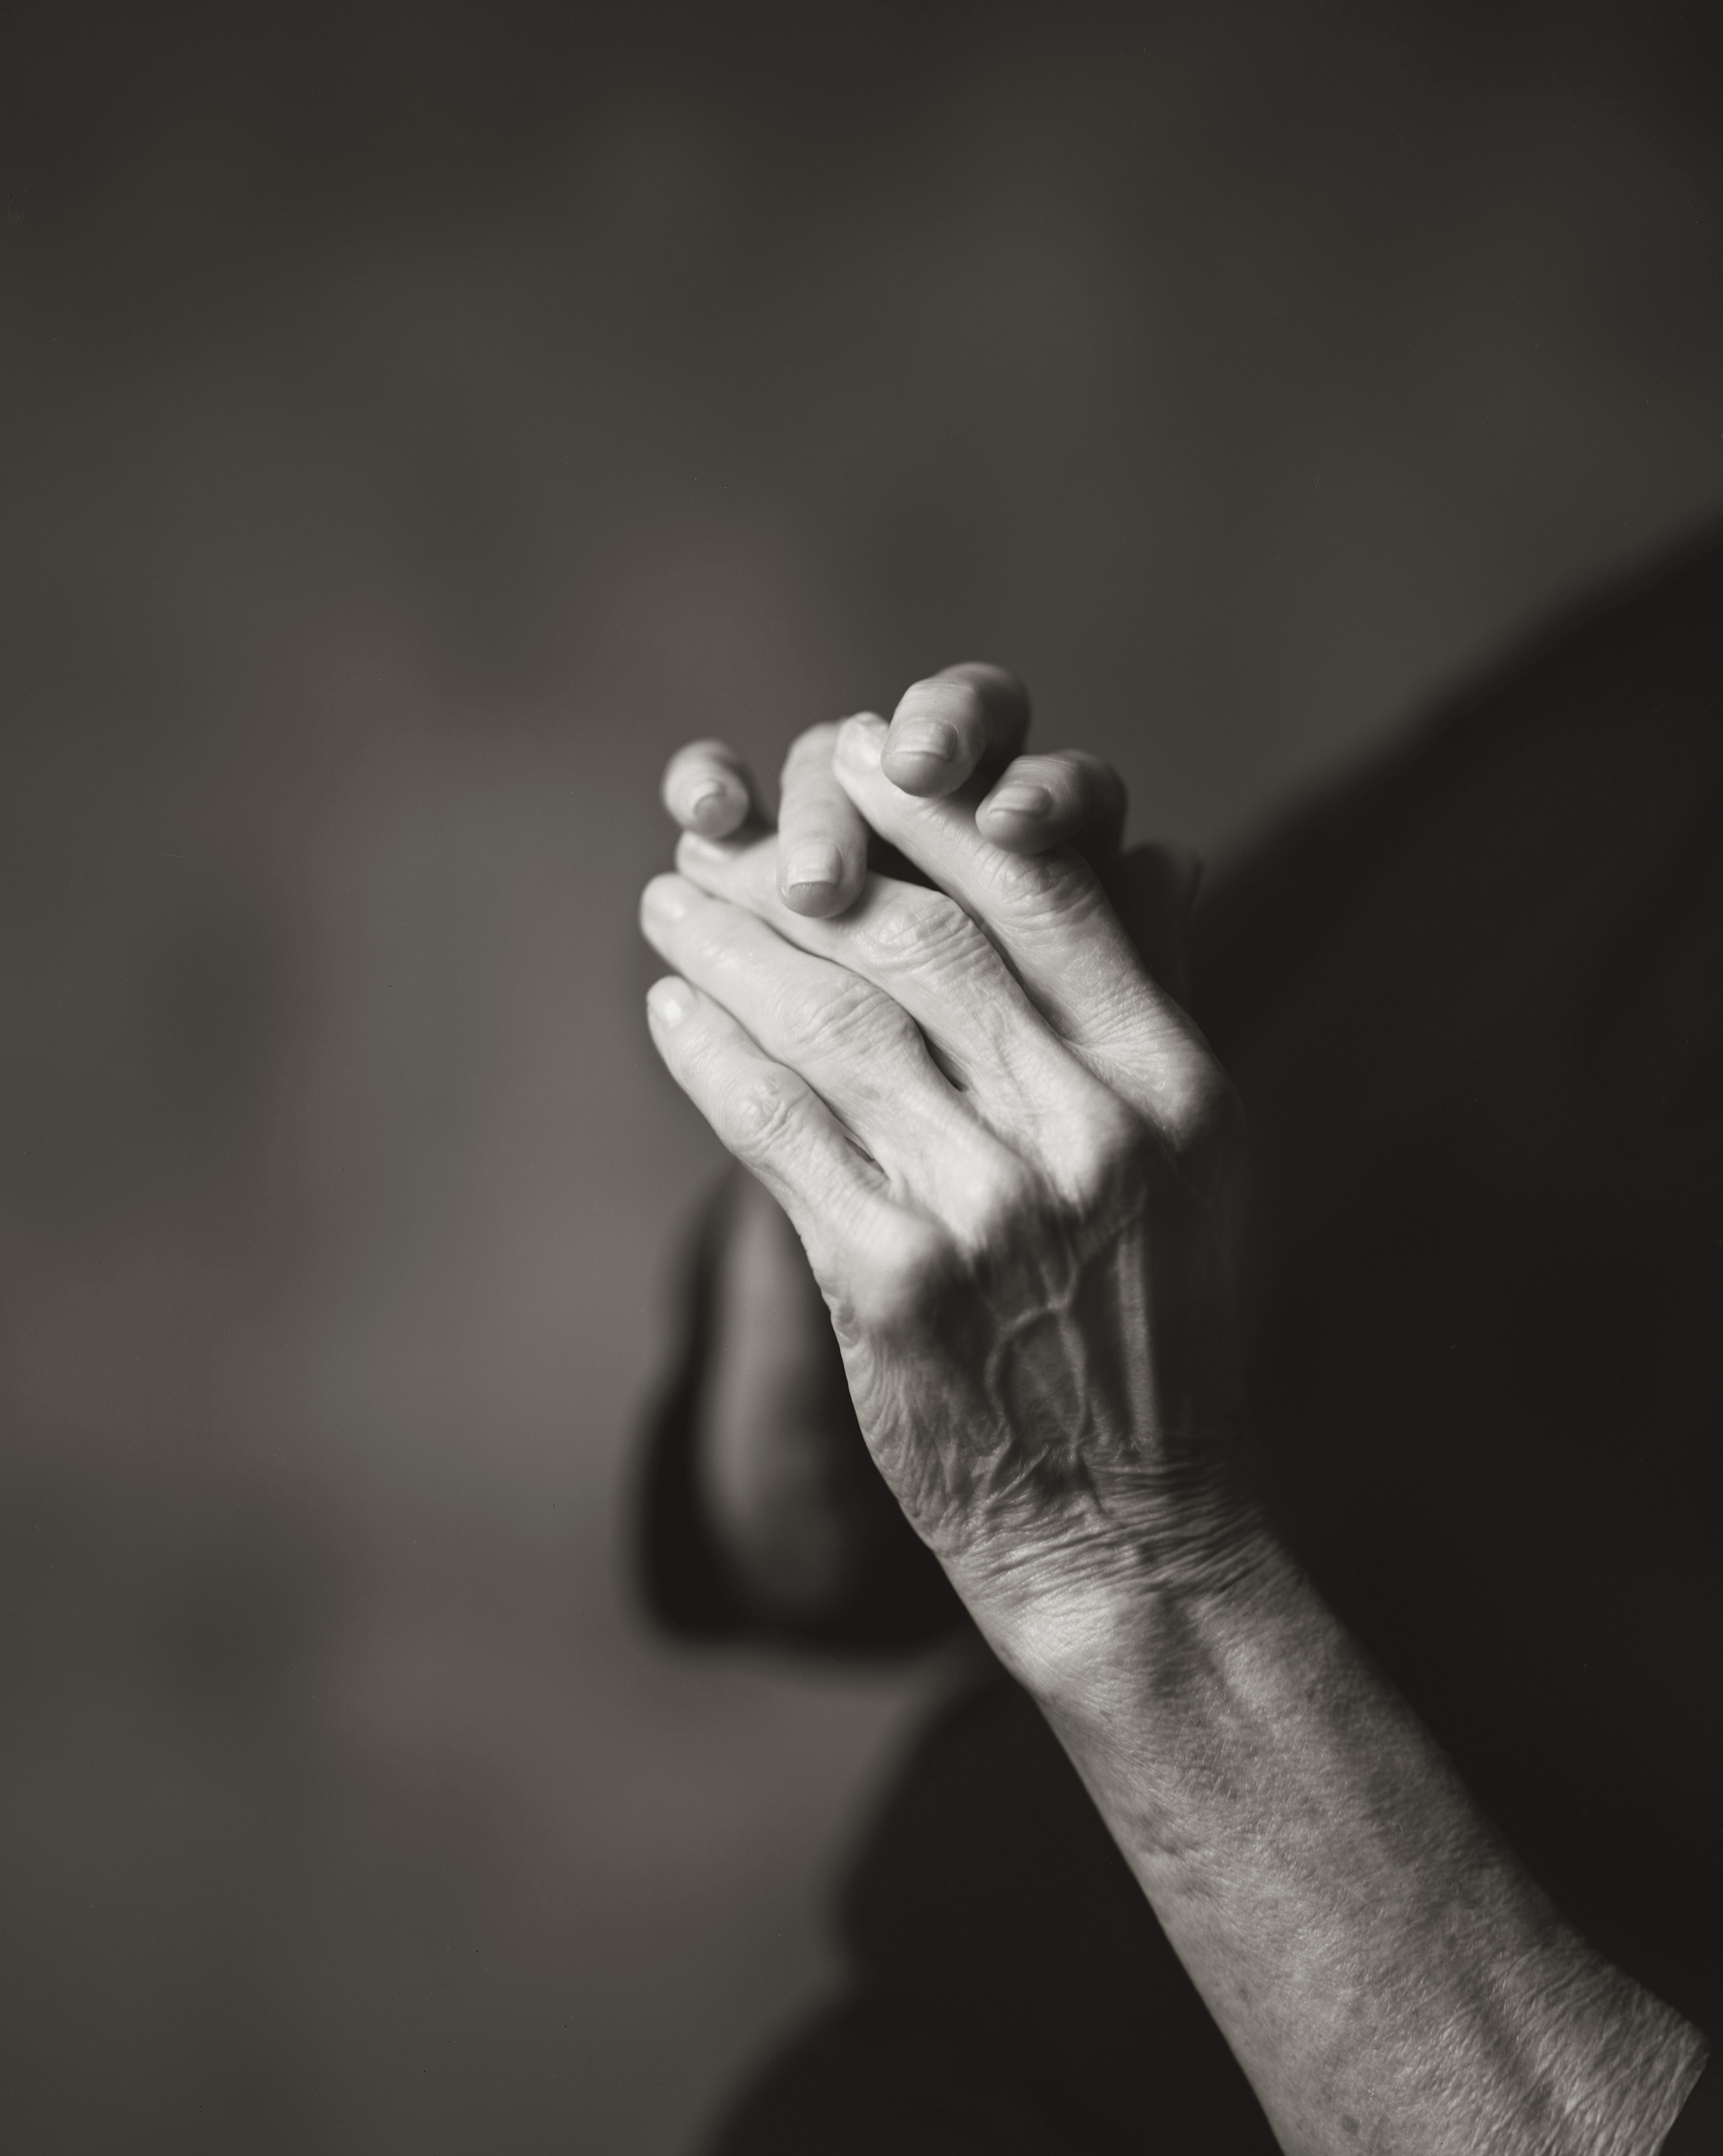  MY MOTHER’S HANDS, WITH ARTHRITIS, 2015 